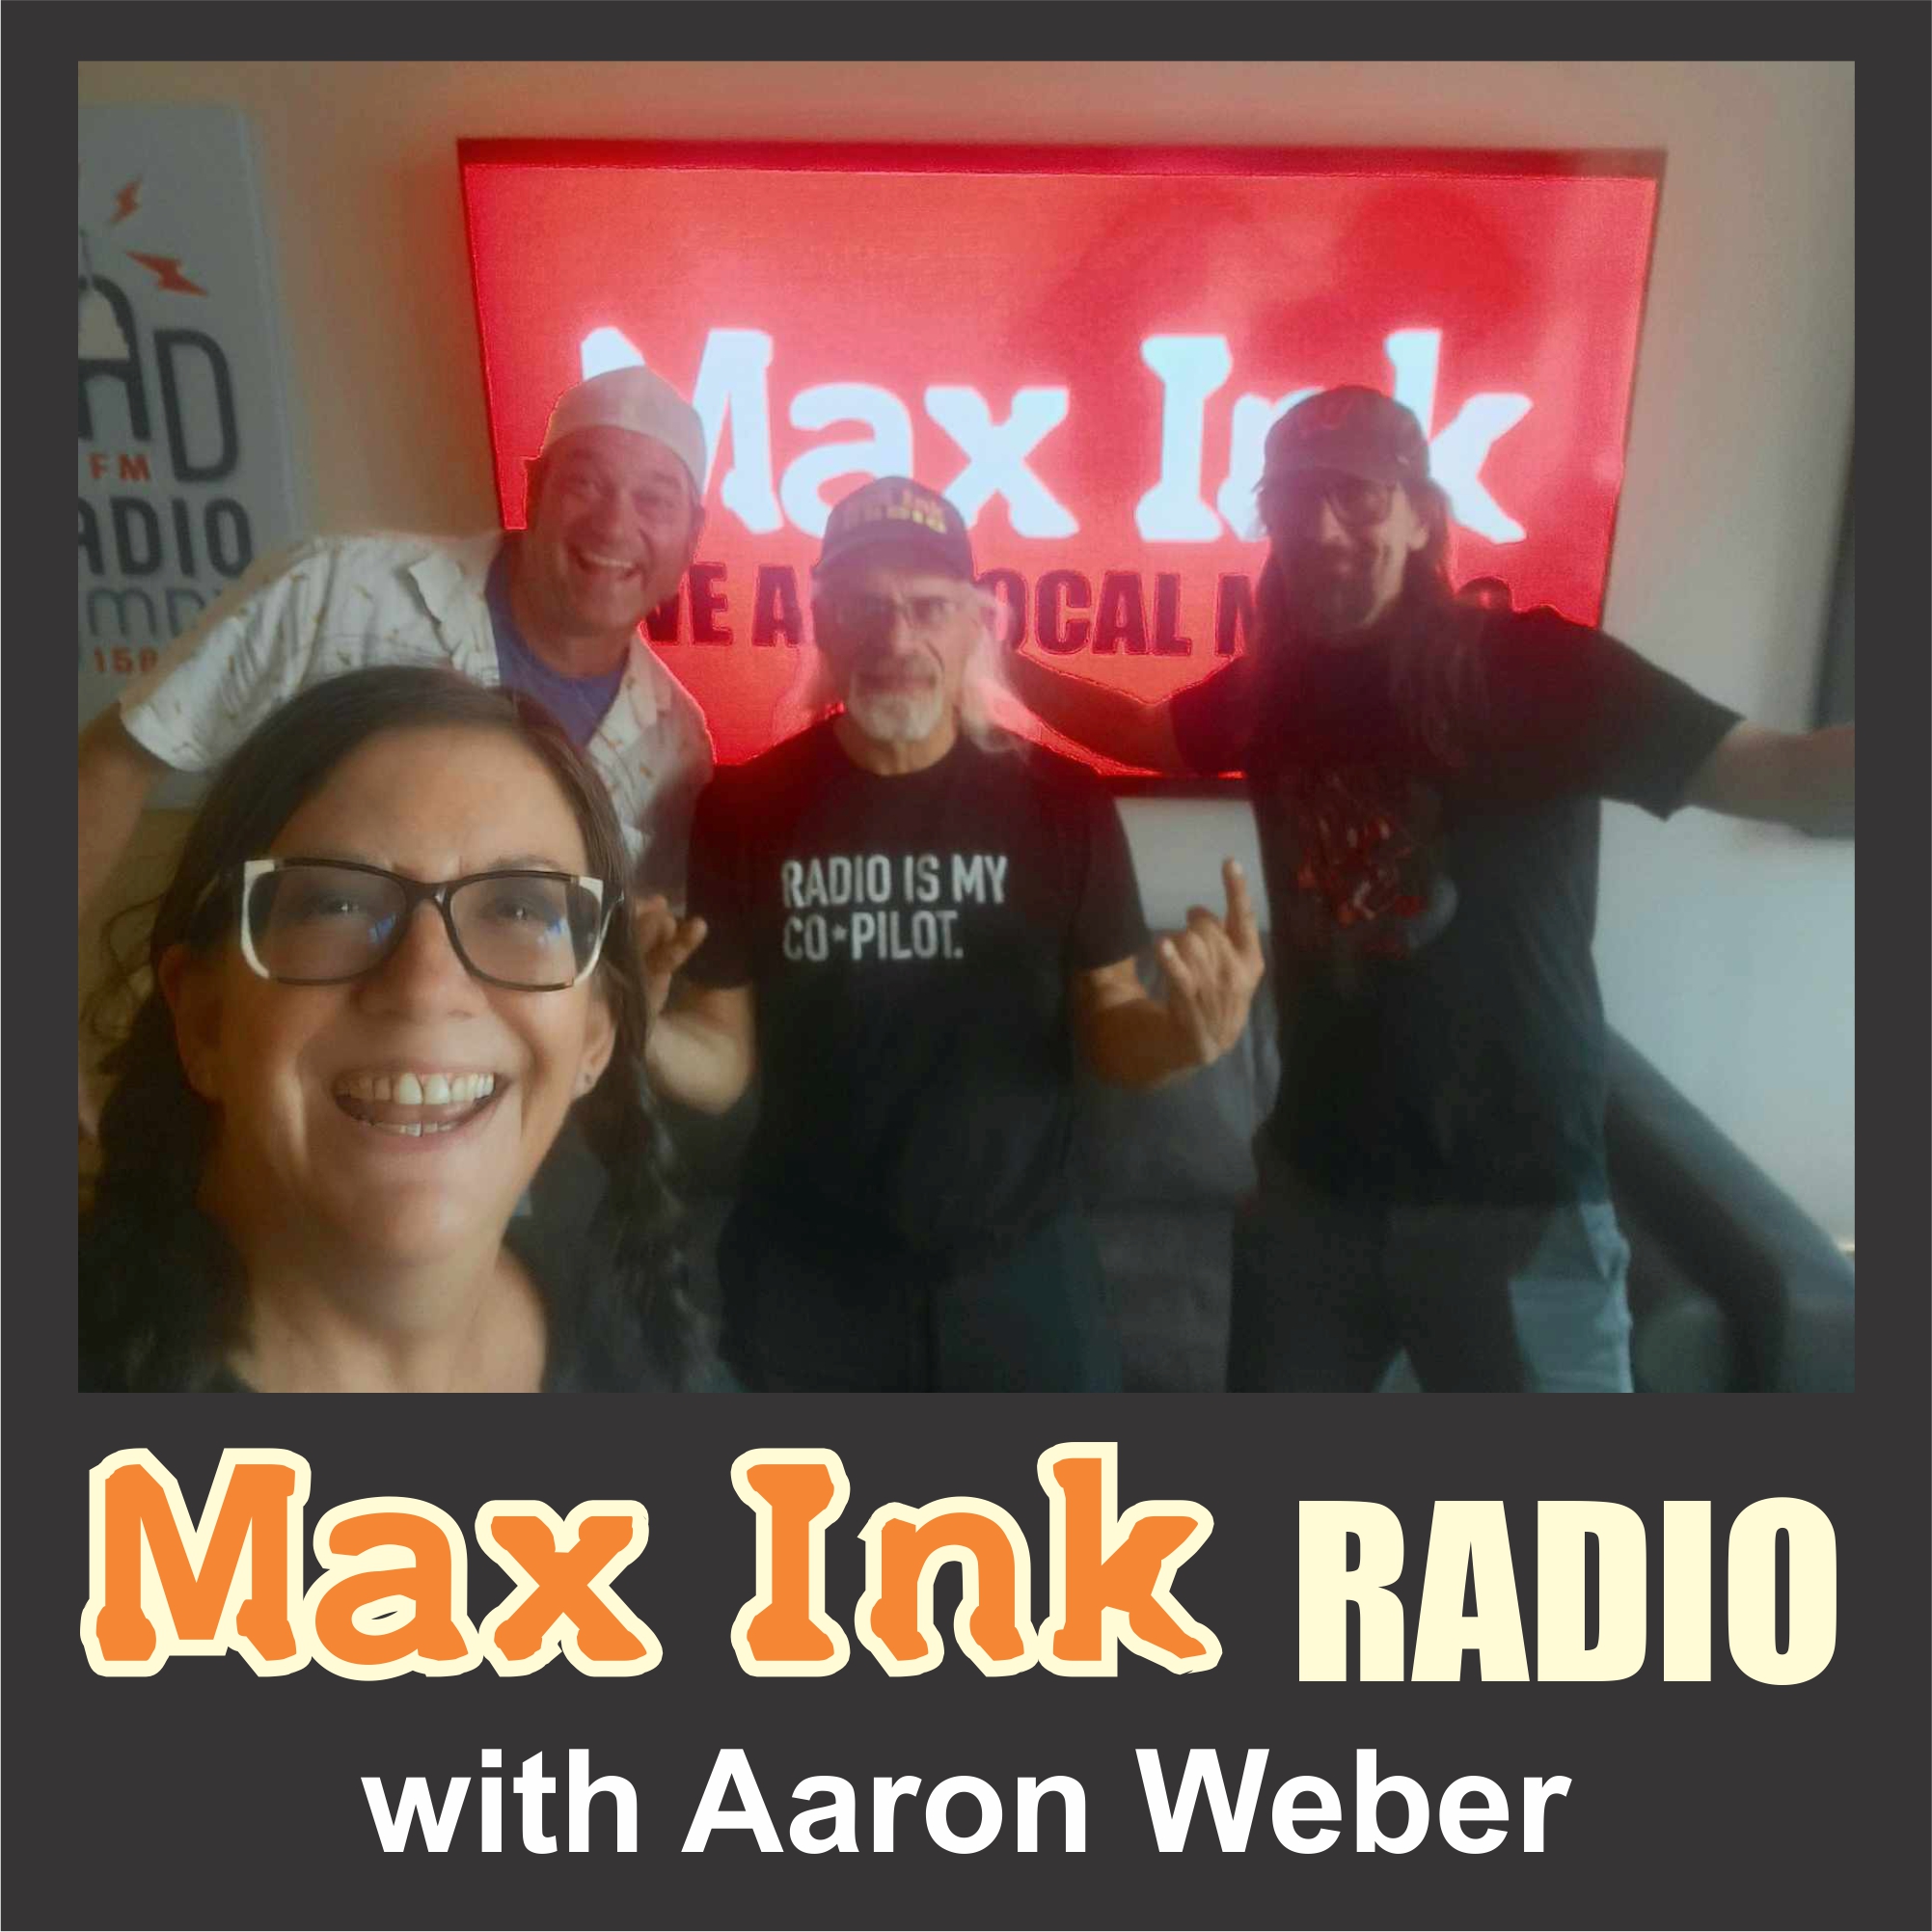 Aaron Weber with Max Ink Radio crew